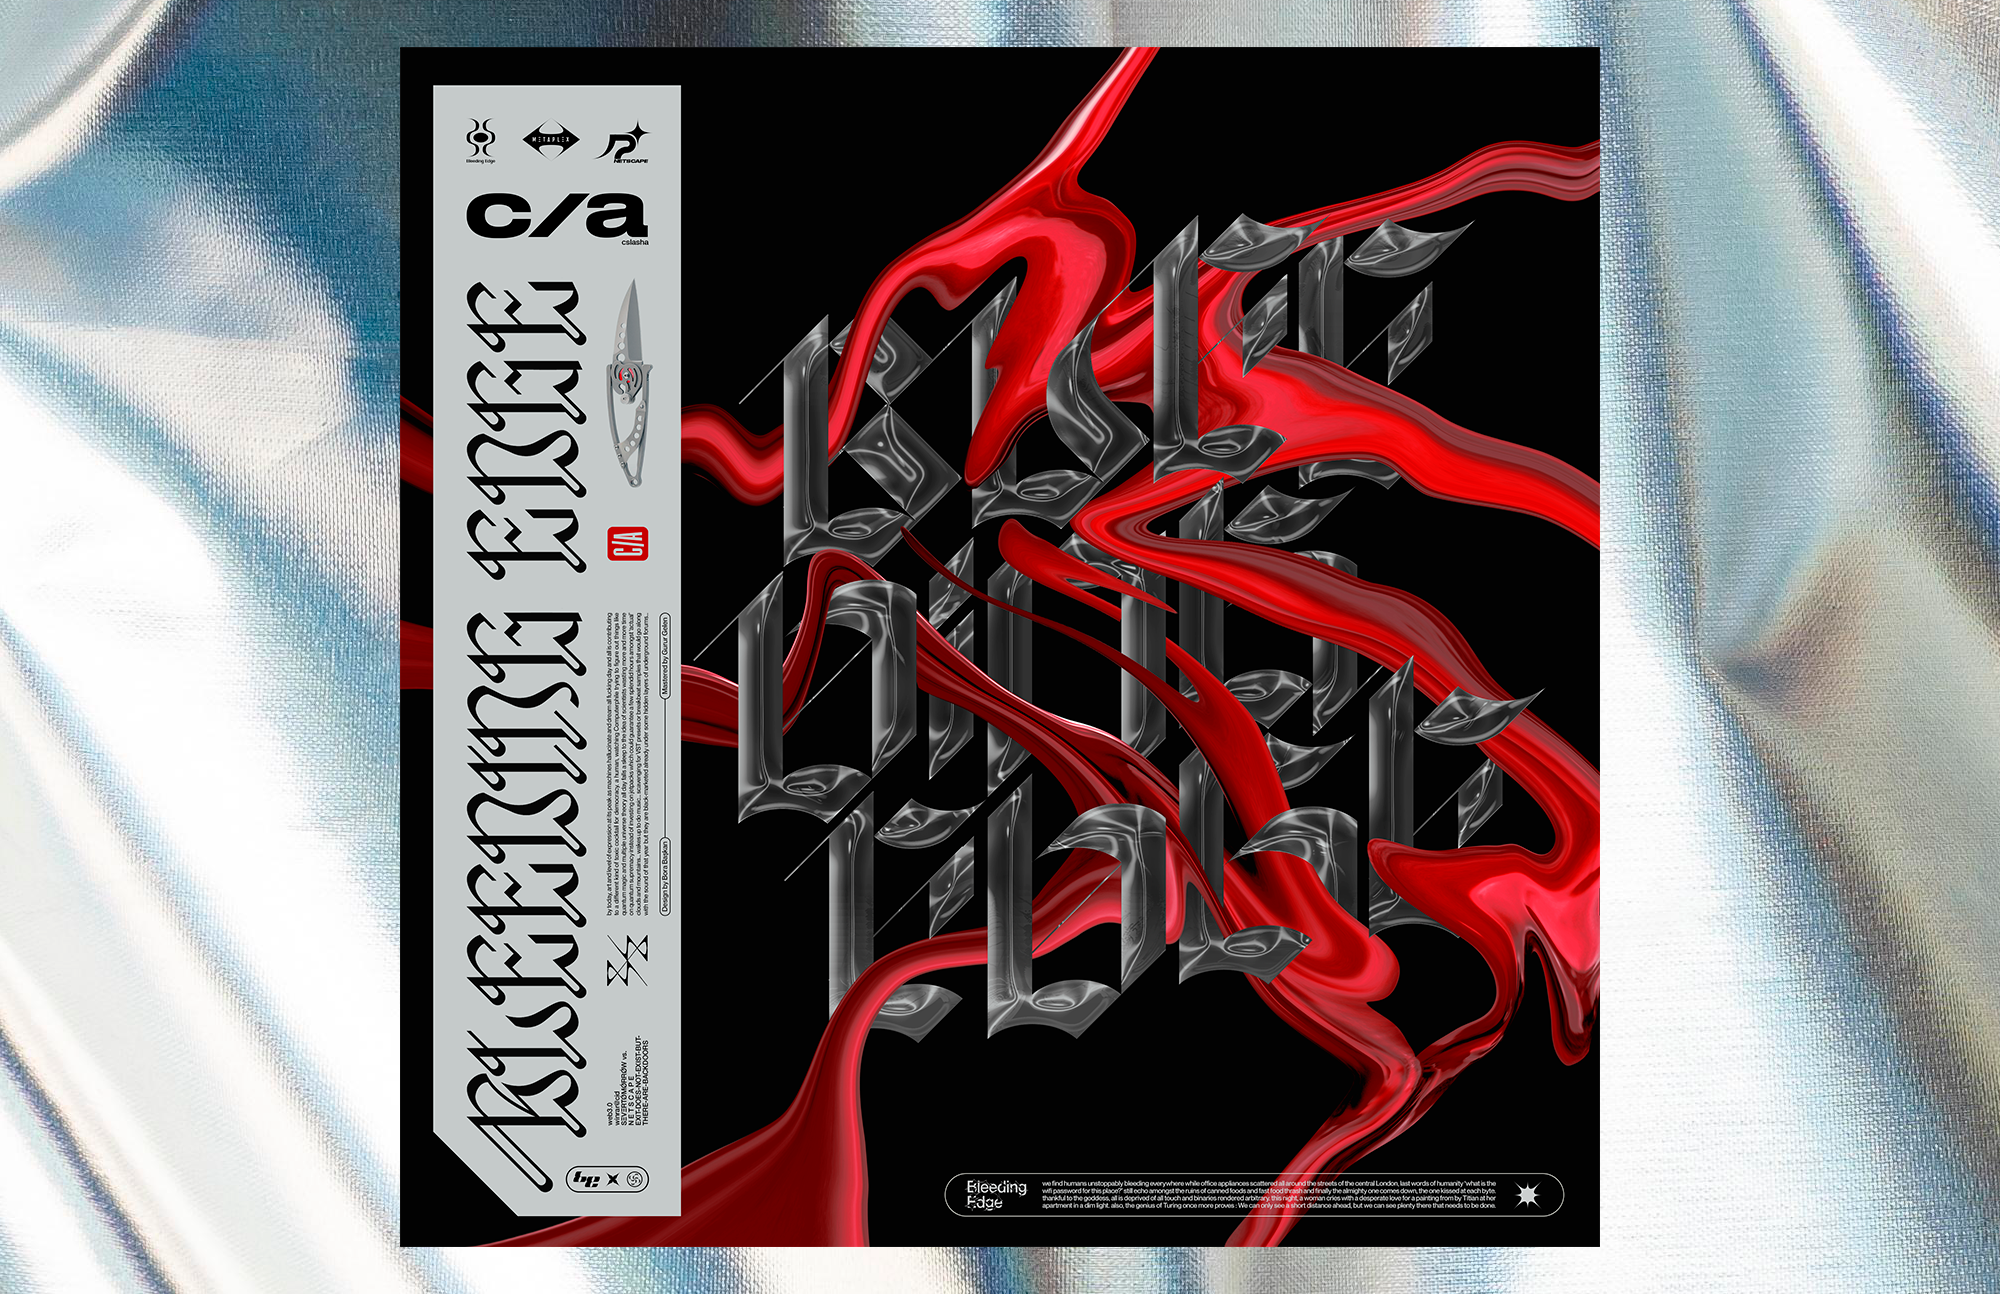 title:C SLASH A — BLEEDING EDGE EP [digital release] description:Album cover design. year:2019